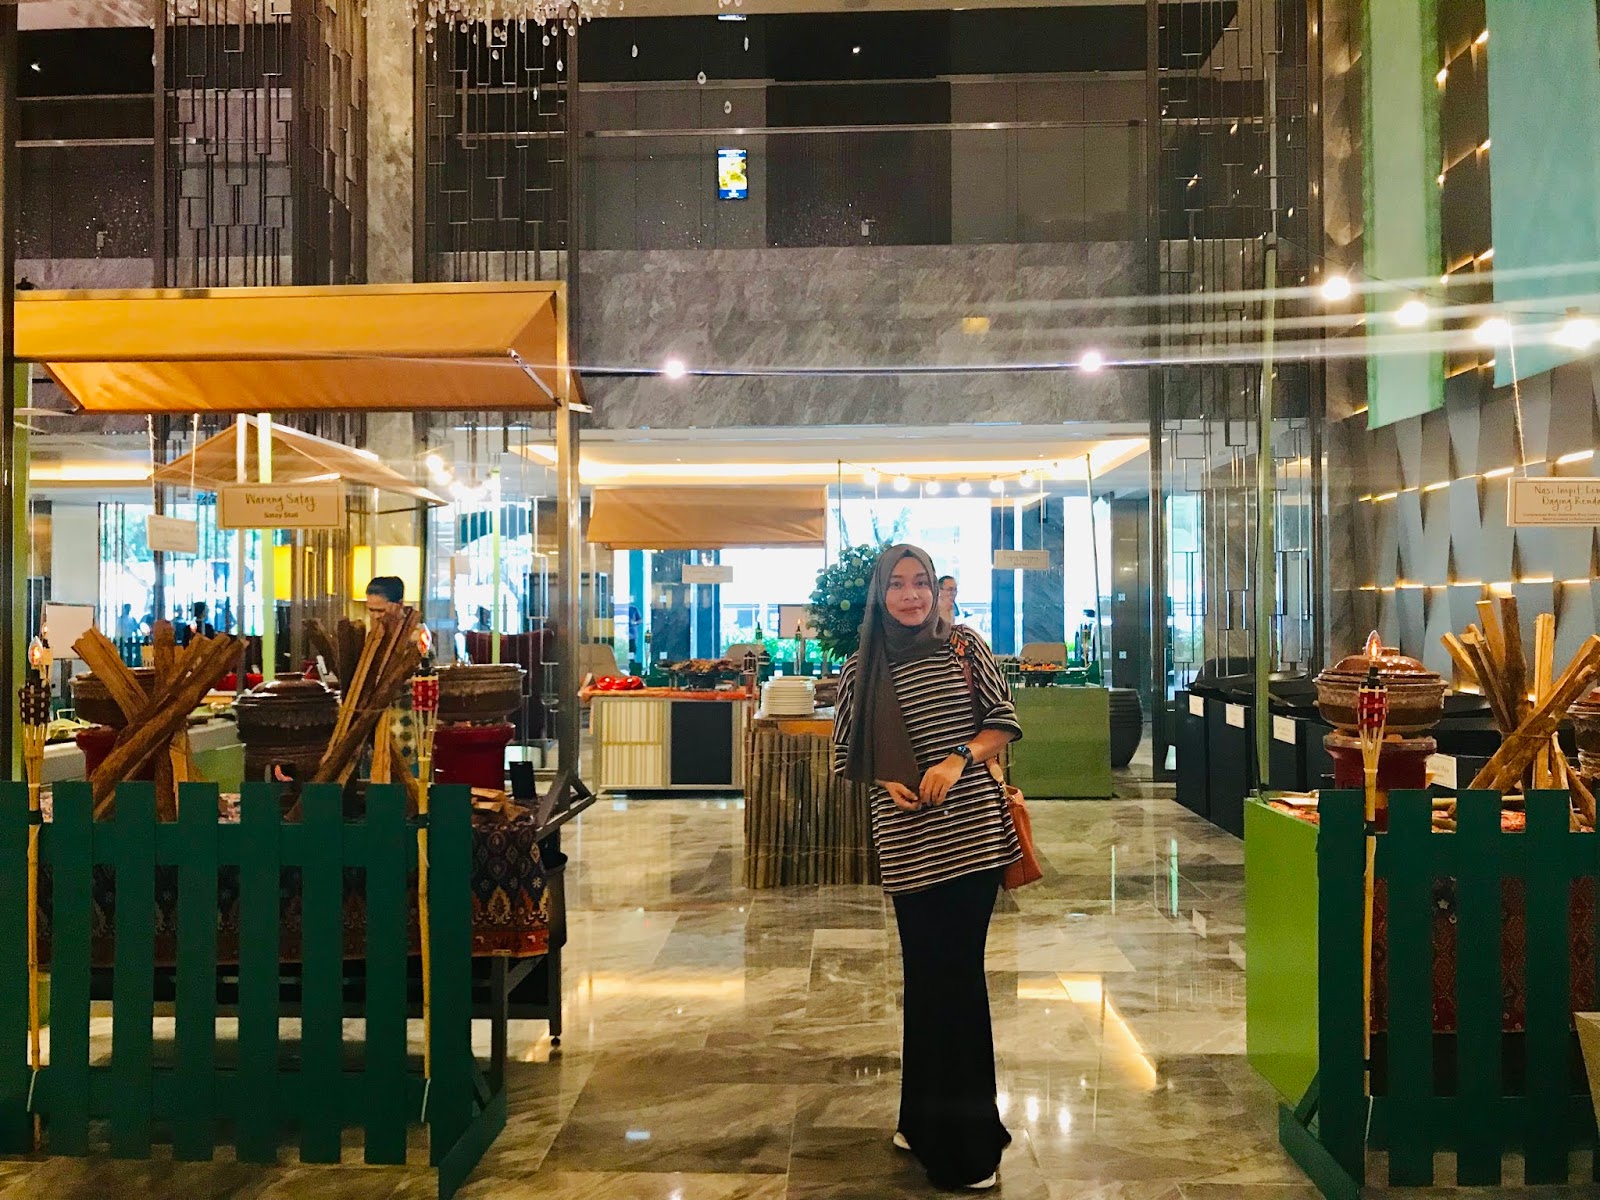 Jom Makan 'Balik Kampung' at Hilton Hotels Kota Kinabalu